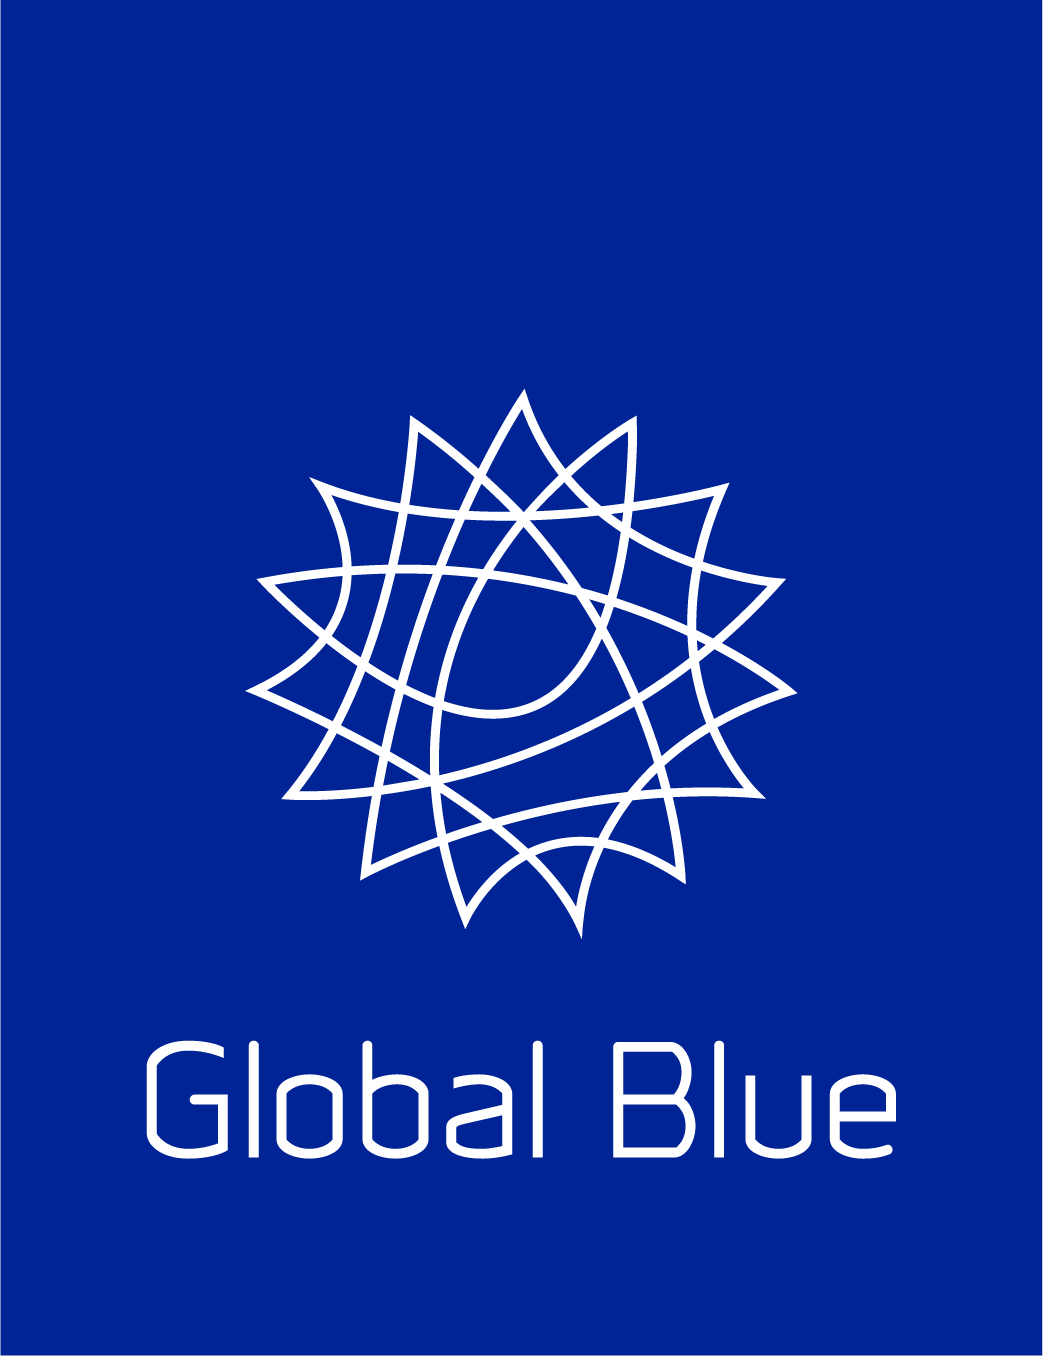 Global Blue Group. Налоги? Не, не слышал